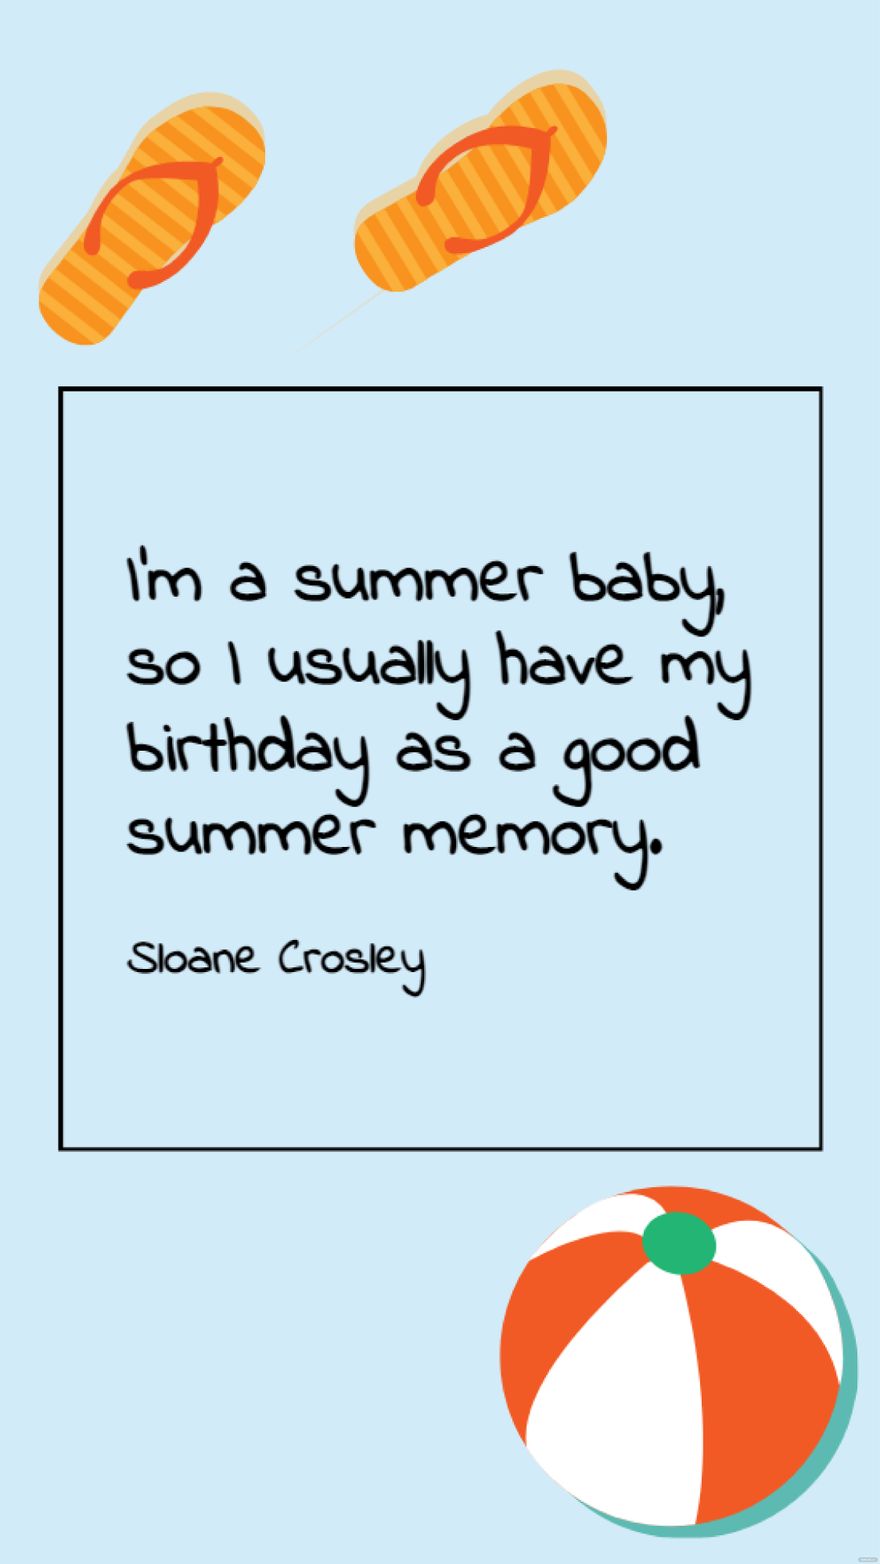 Free Sloane Crosley - I'm a summer baby, so I usually have my birthday as a good summer memory.